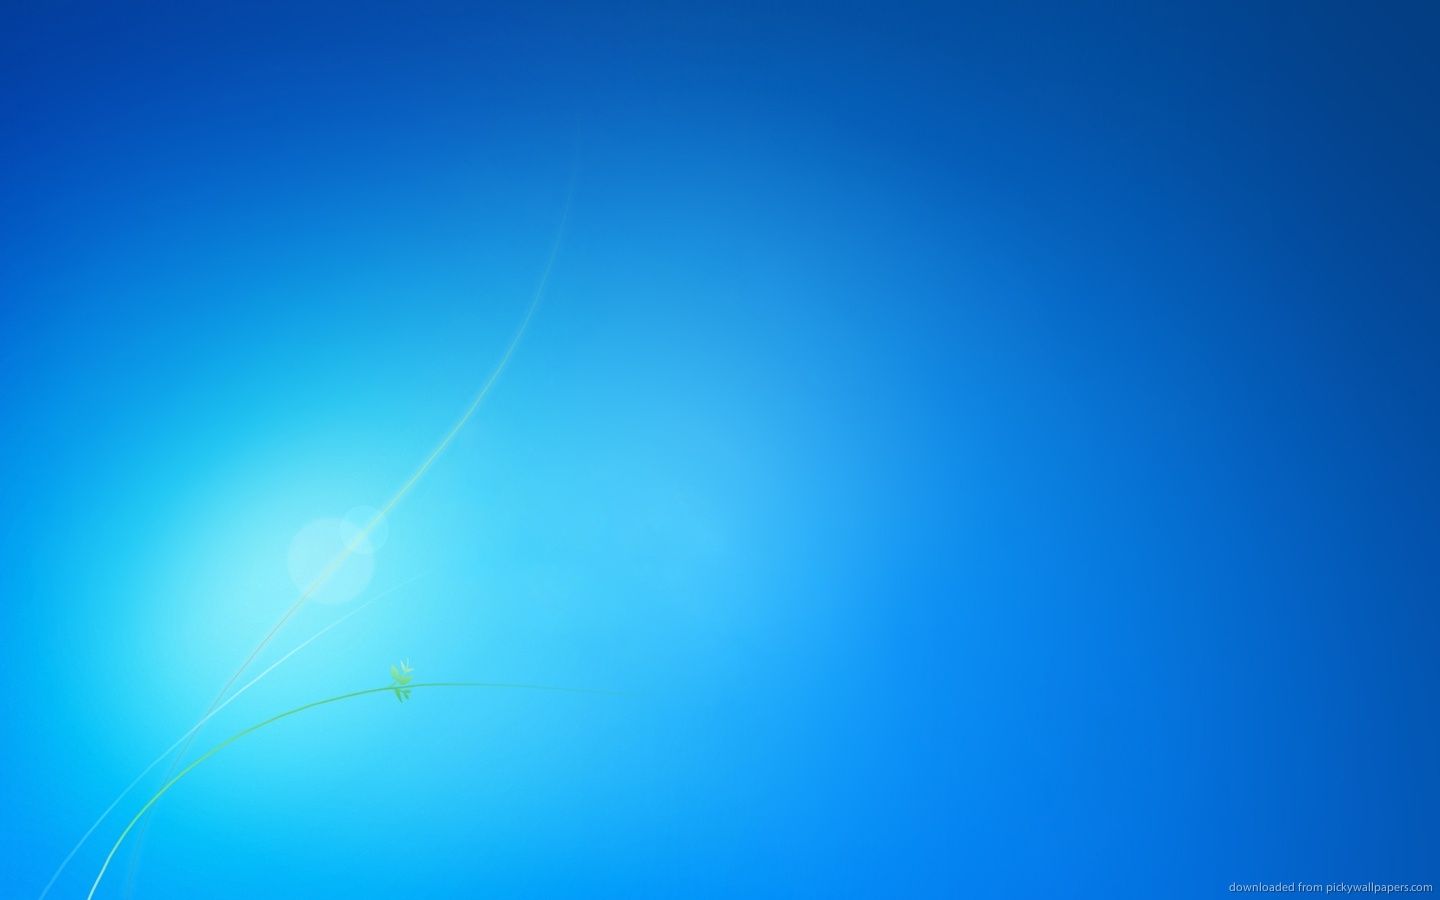 Download 1440x900 Windows 7 Official Wallpaper